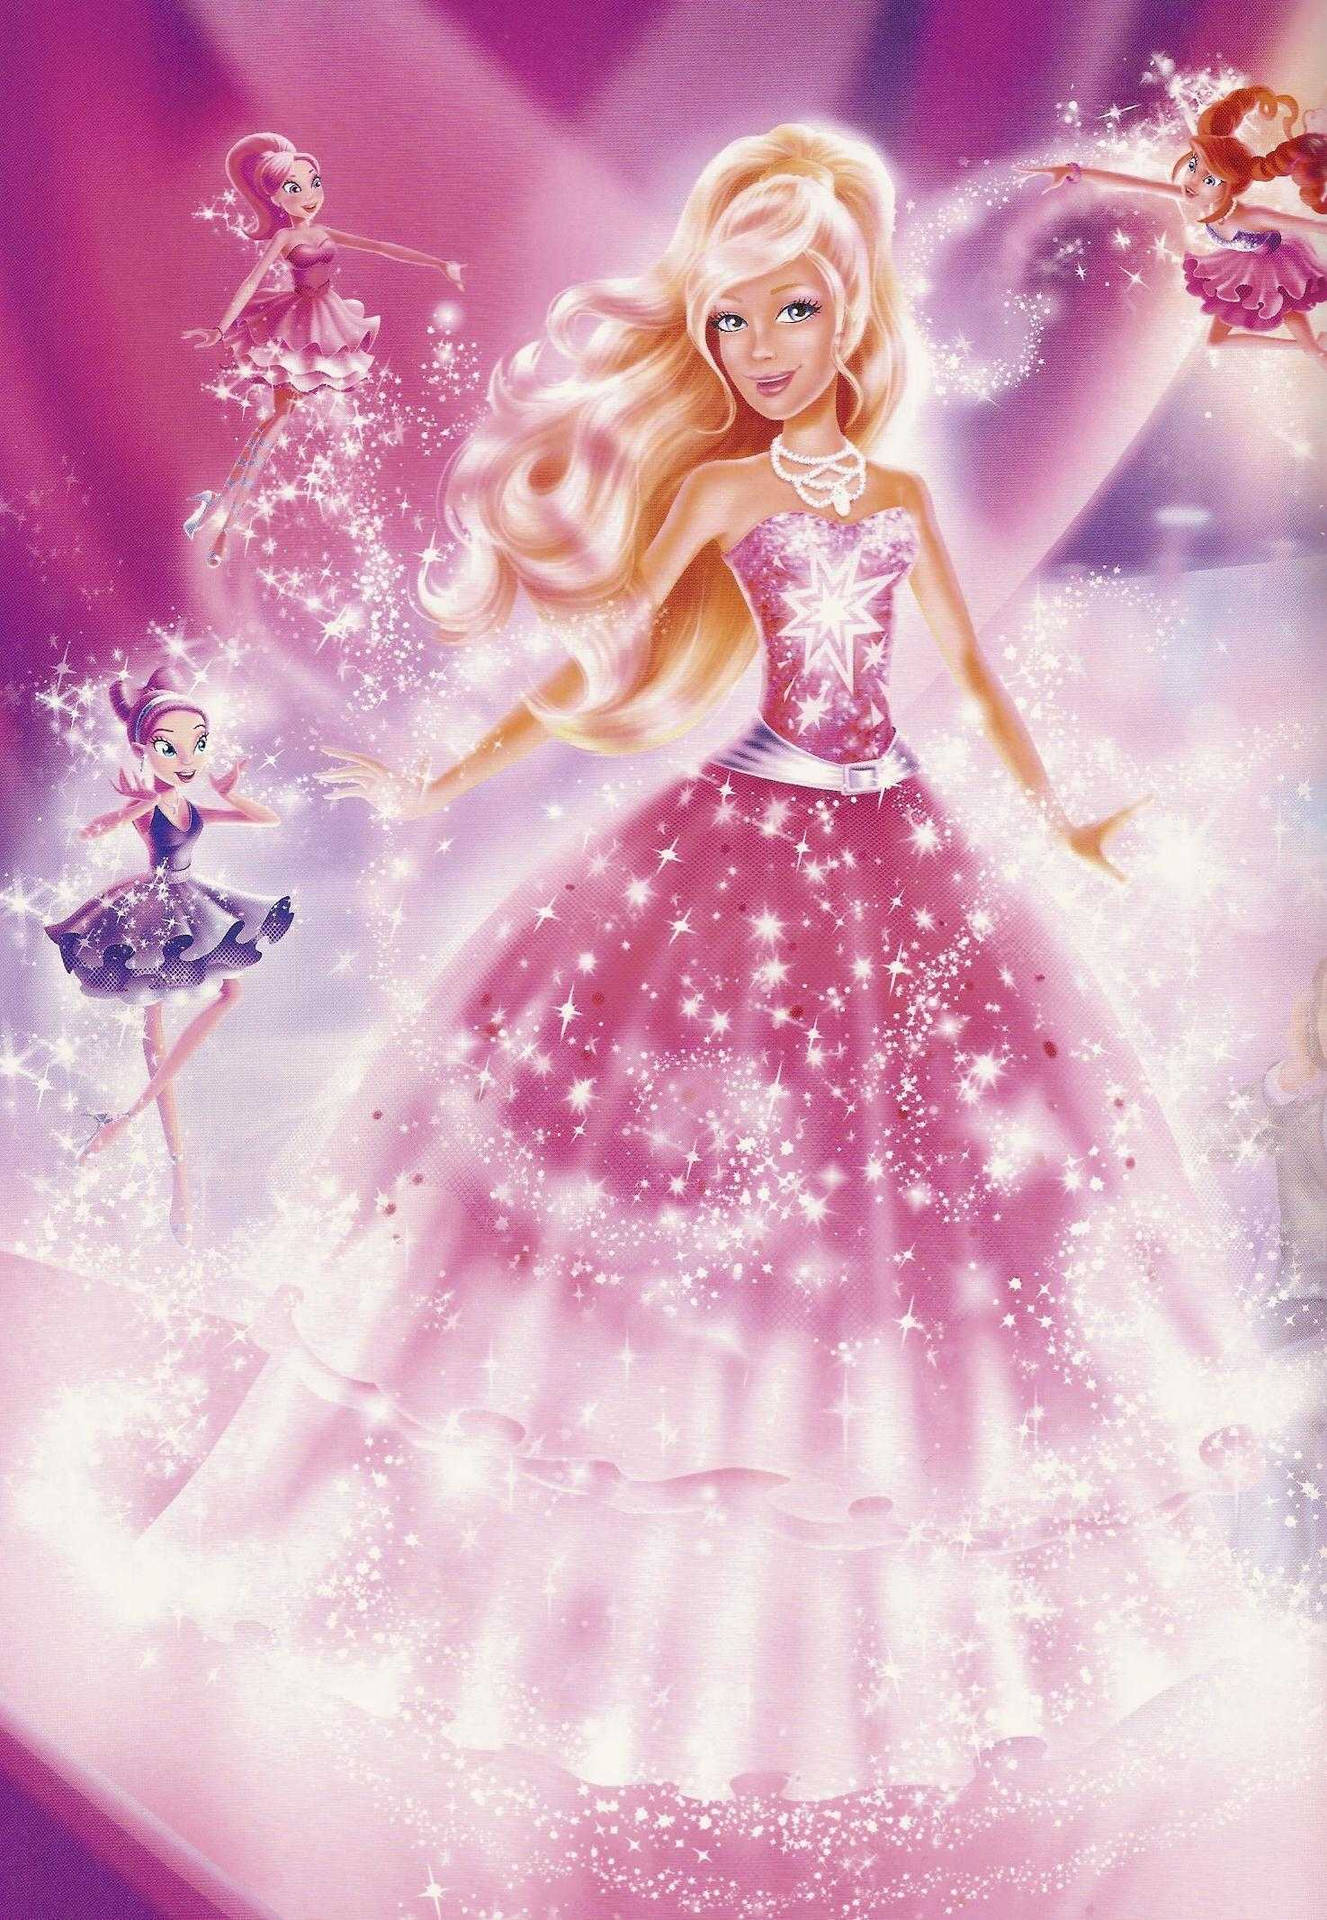 Wallpaper Pop Star  Barbie princess, Barbie, Barbie images